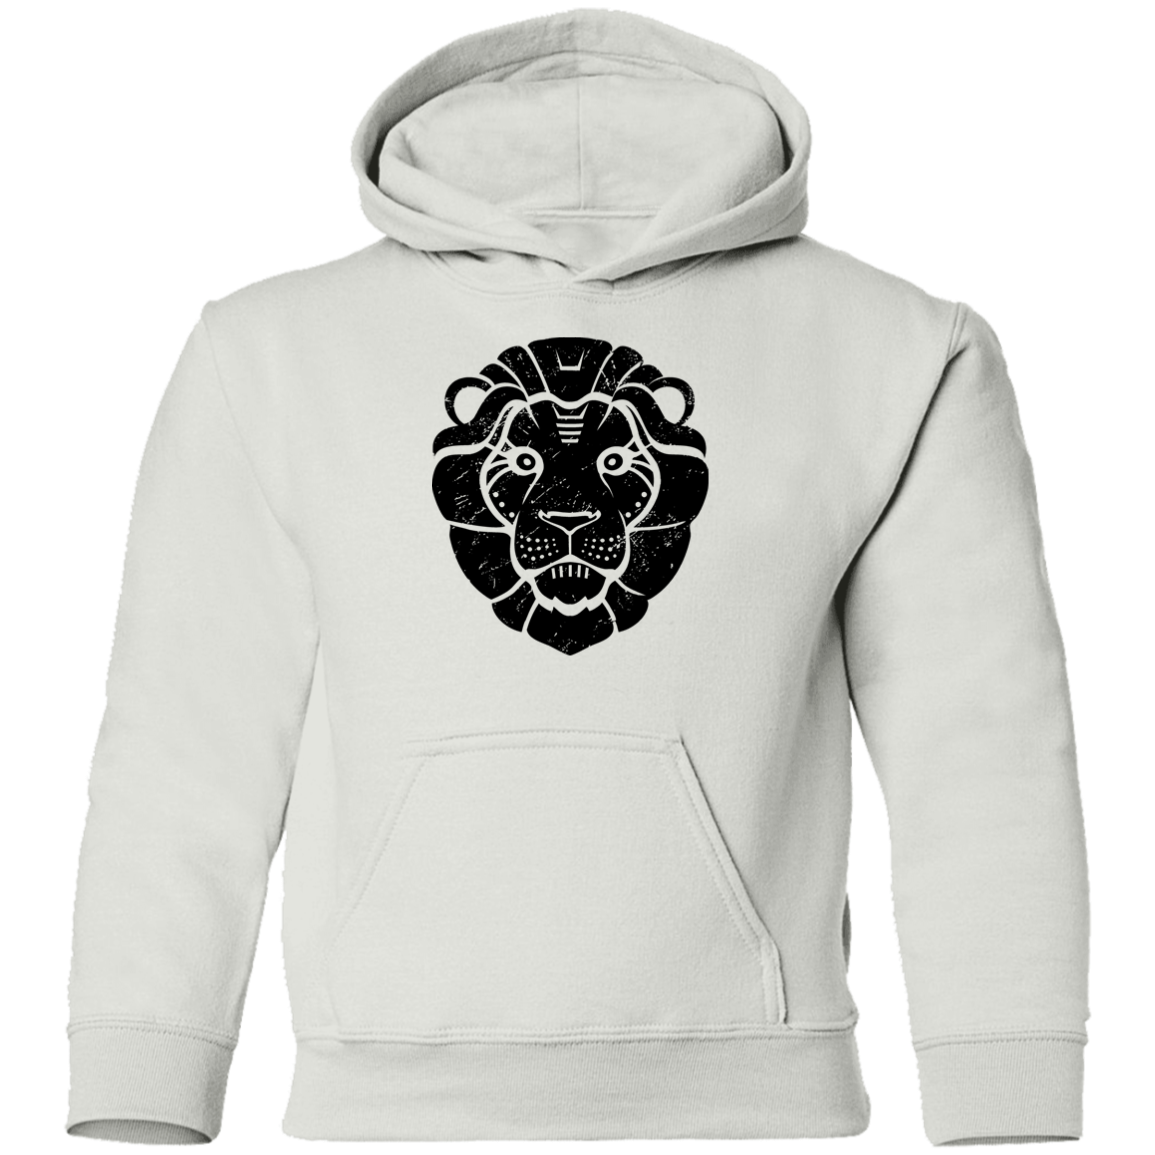 Black Distressed Emblem Hoodies for Kids (Lion/Leo)